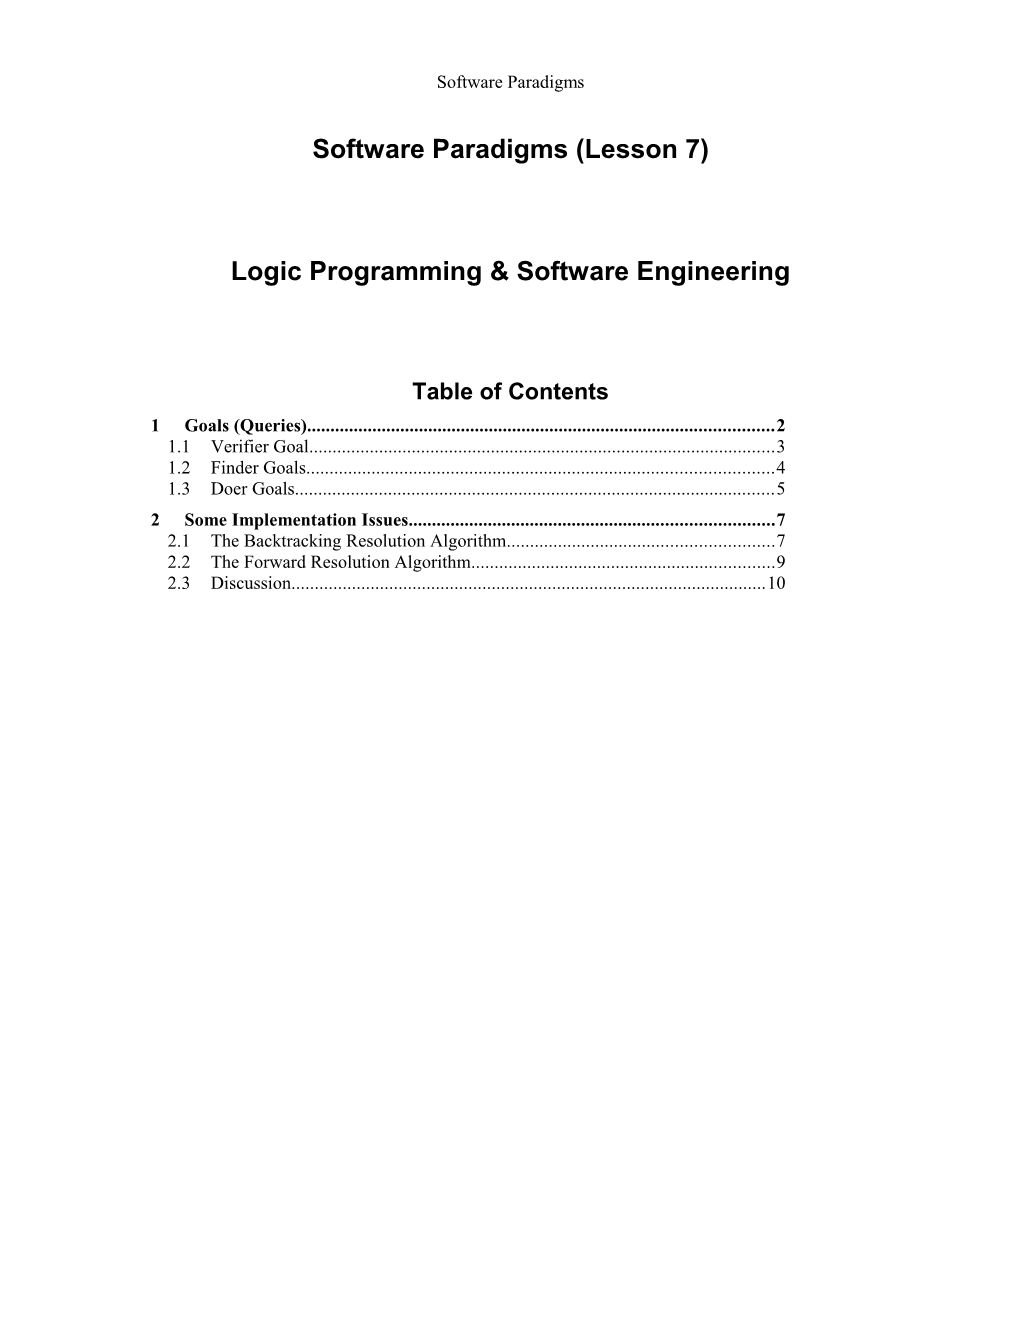 Lecture 7: Logic Programming Paradigm (2)